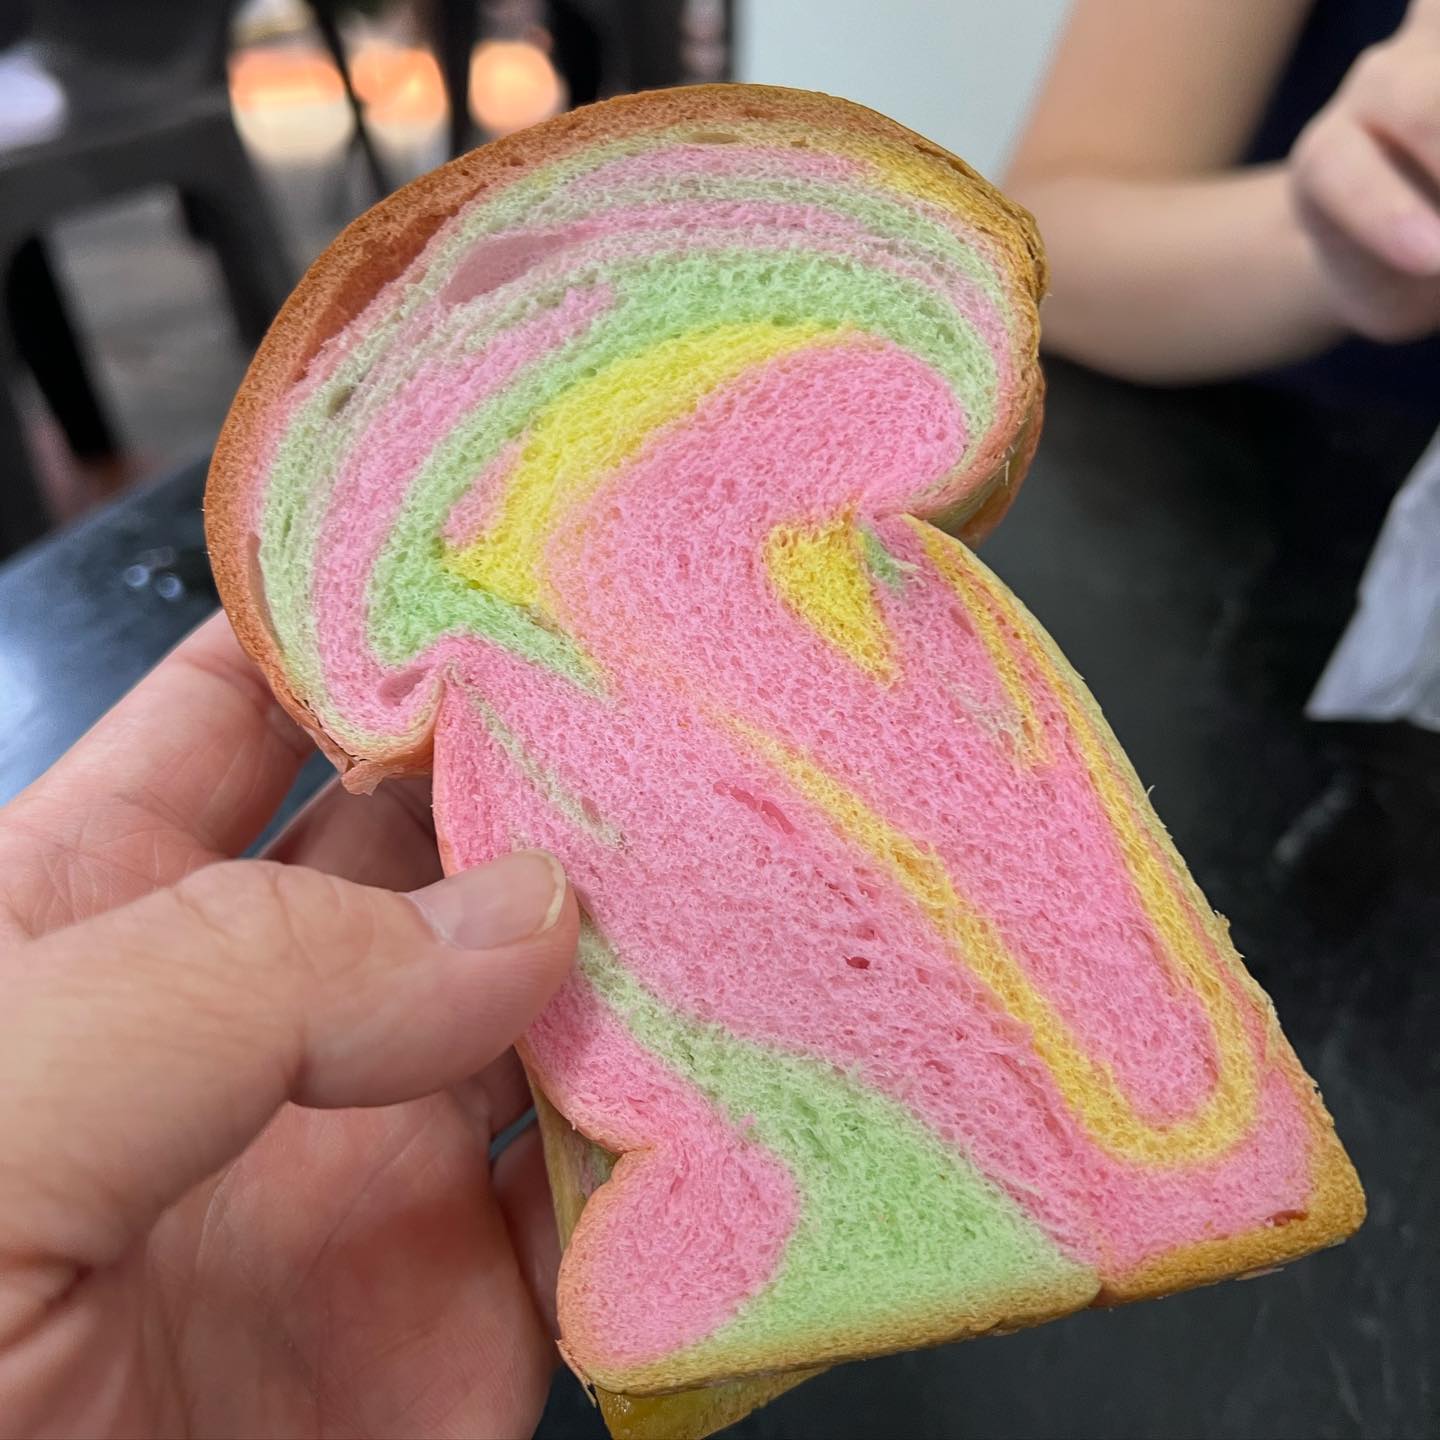 jie bakery tai seng - rainbow bread slice